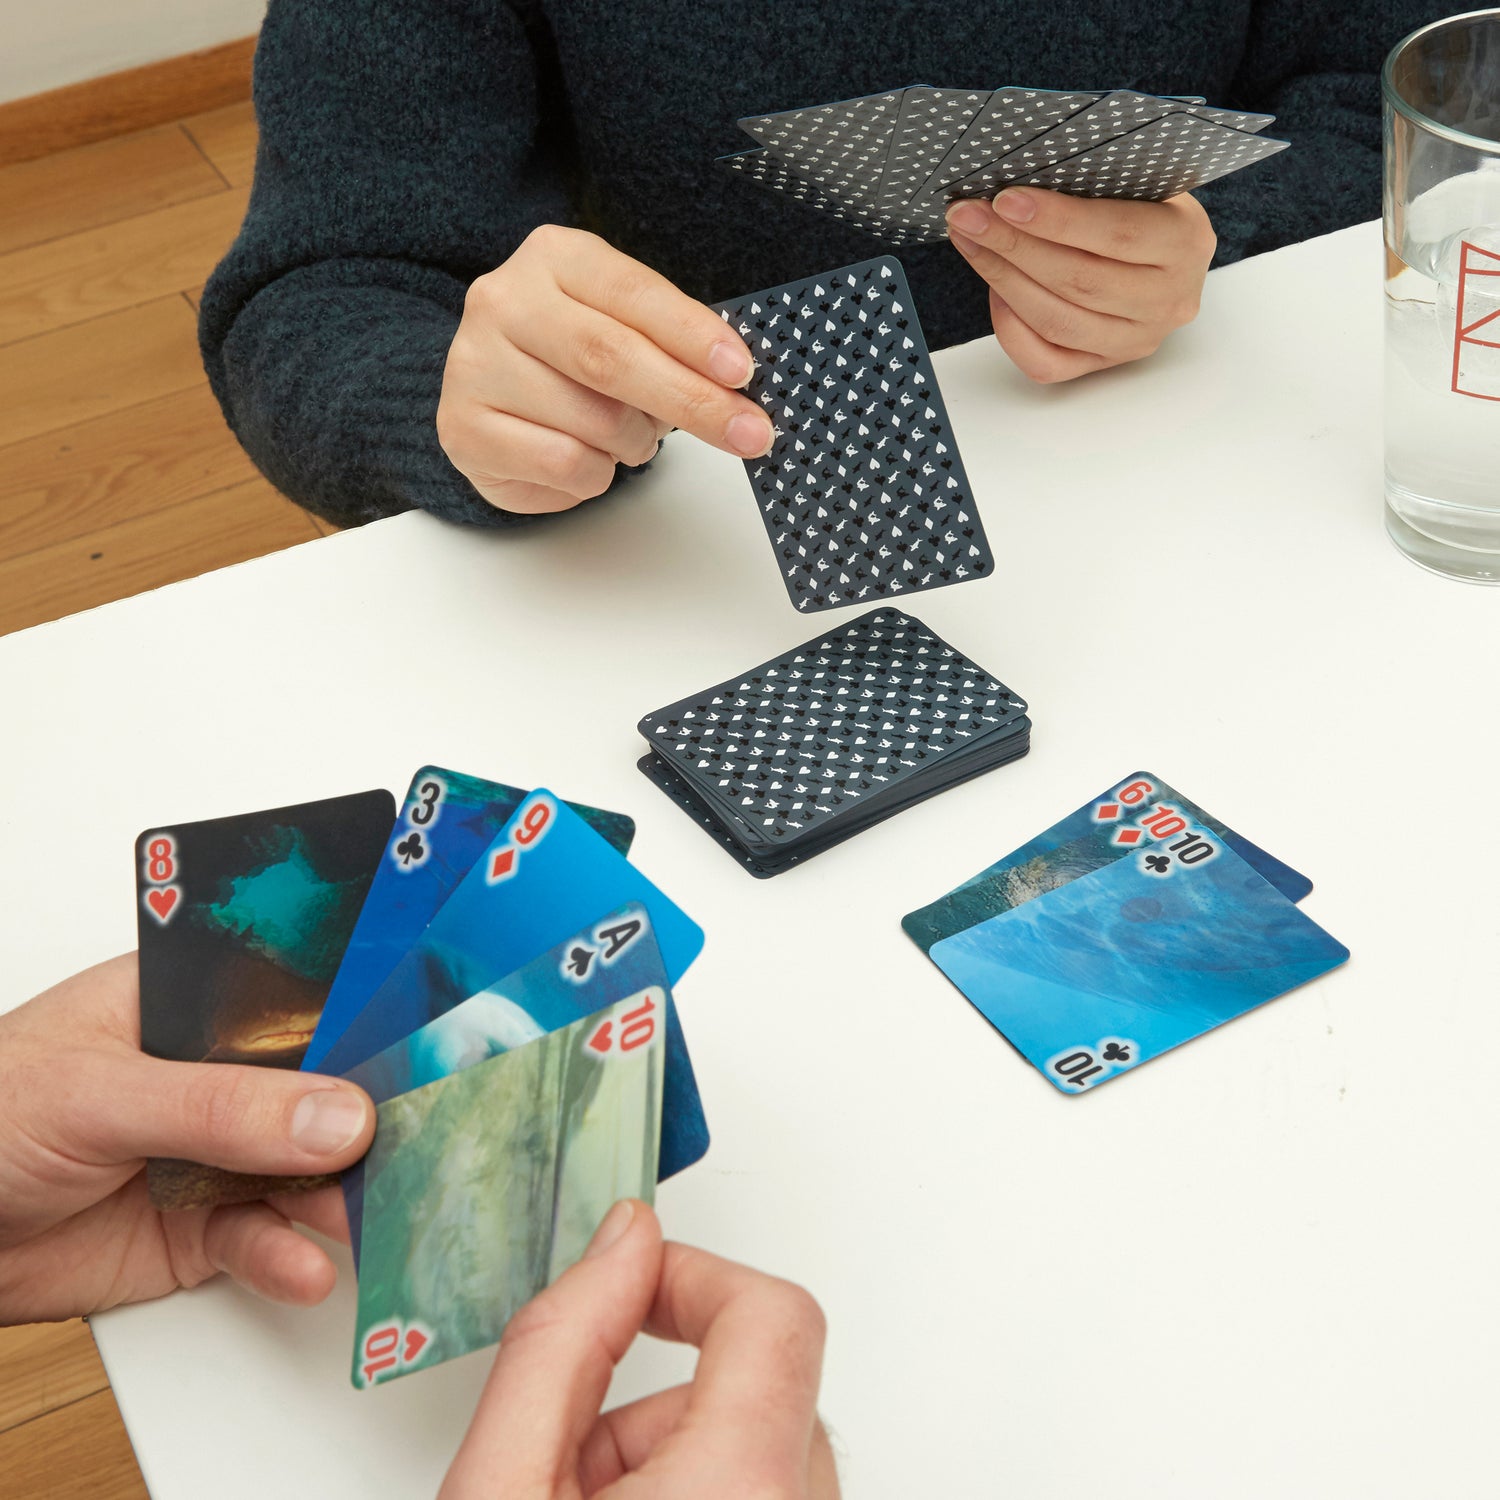 Shark 3D Playing Cards